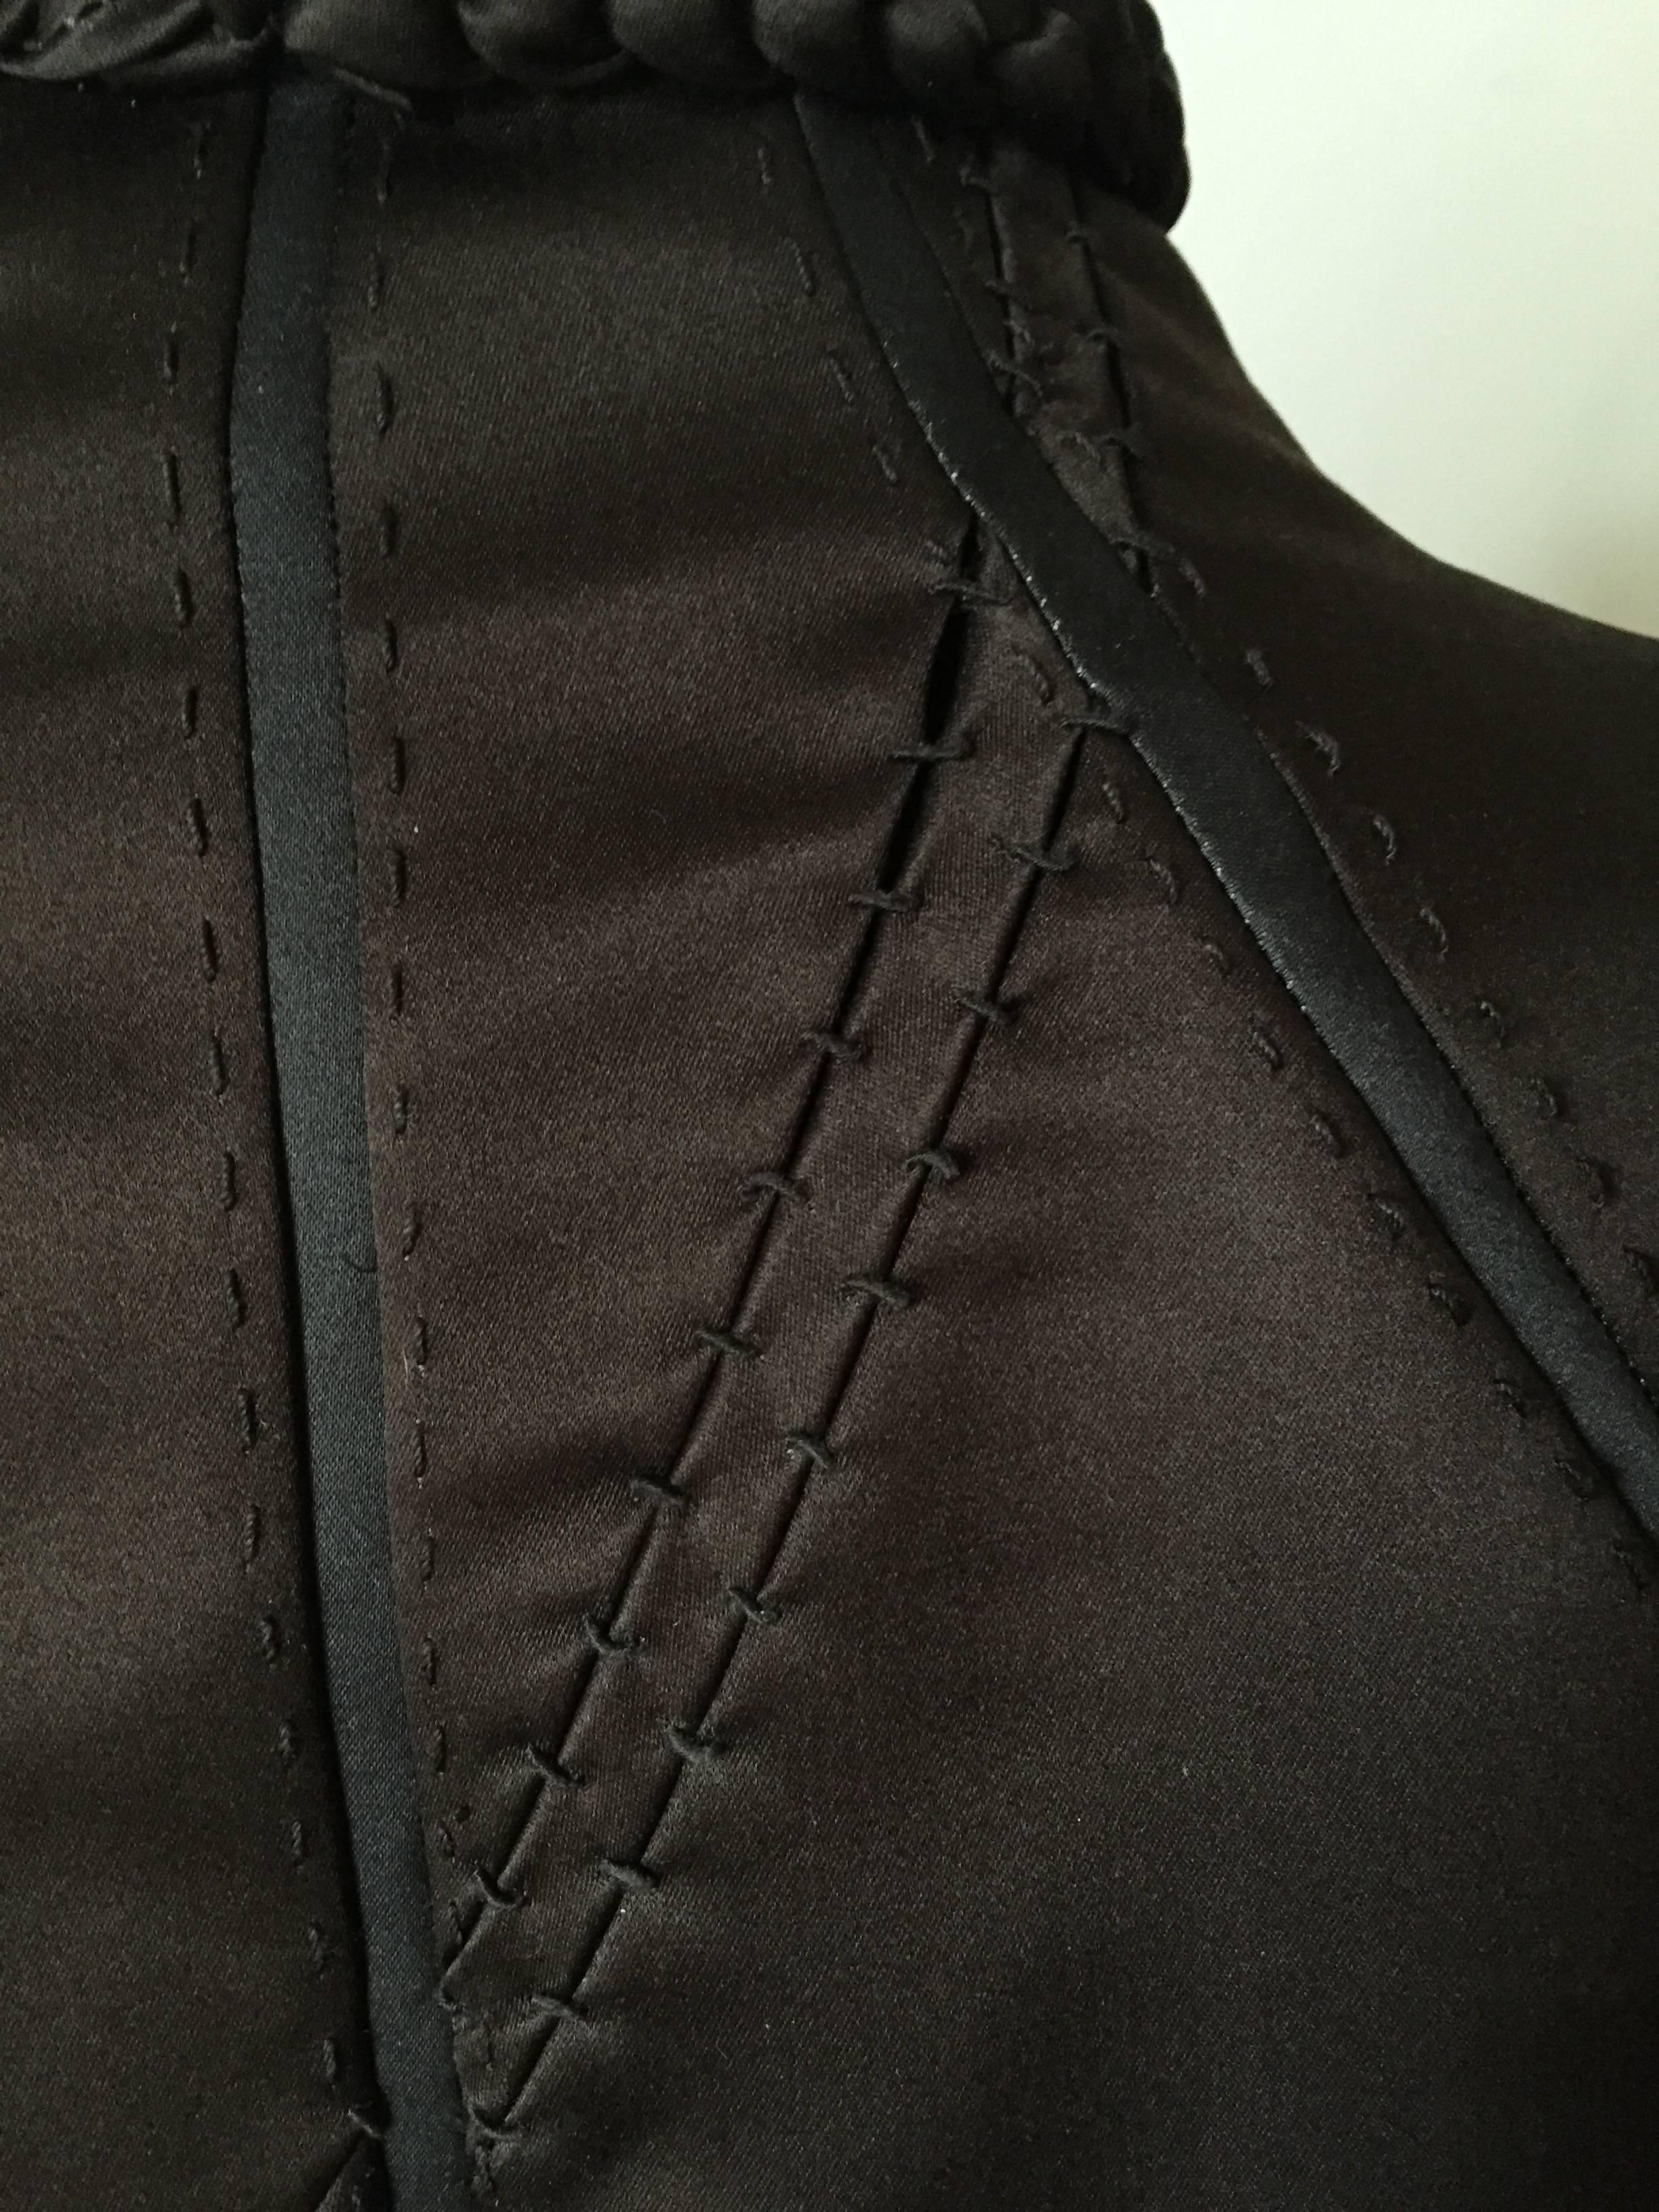 Chado Ralph Rucci Brown Silk coat Braided Trim Wide Sleeves 3-D Details Large 2